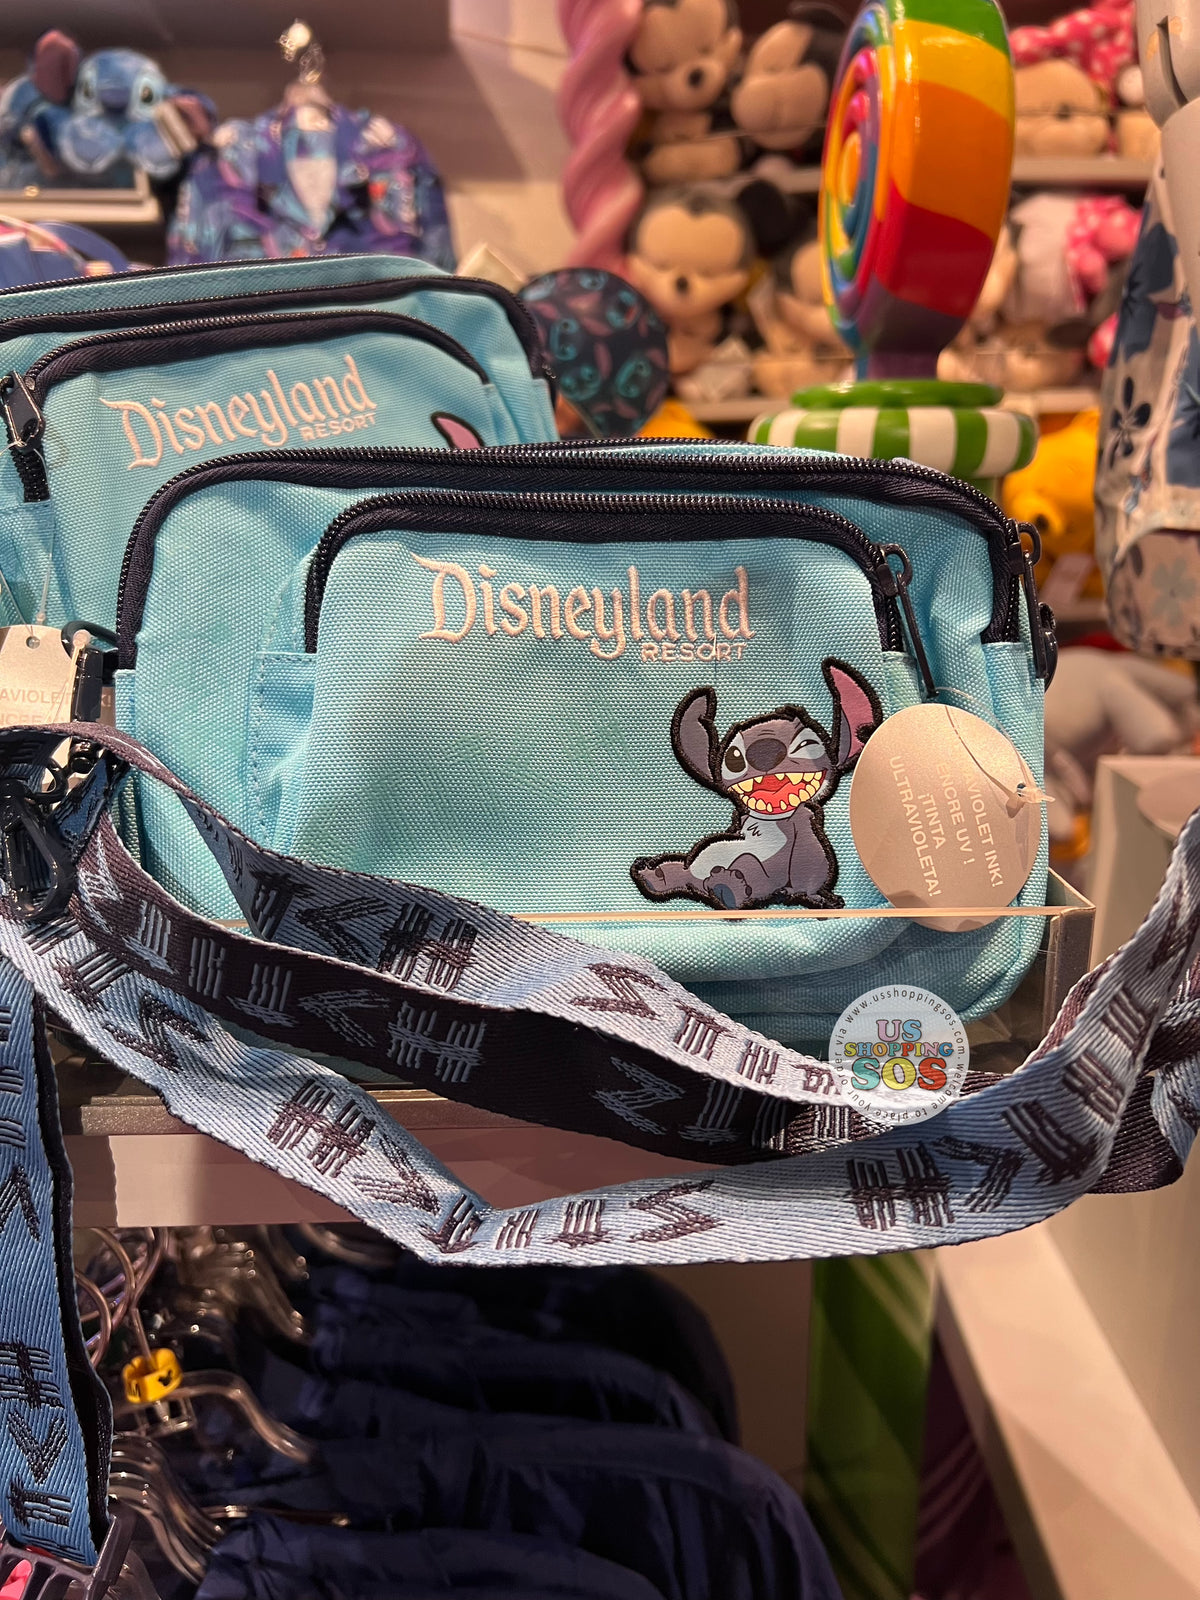 DLR - Lilo & Stitch - Stitch Embroidered Appliqués “Disneyland Resort ...